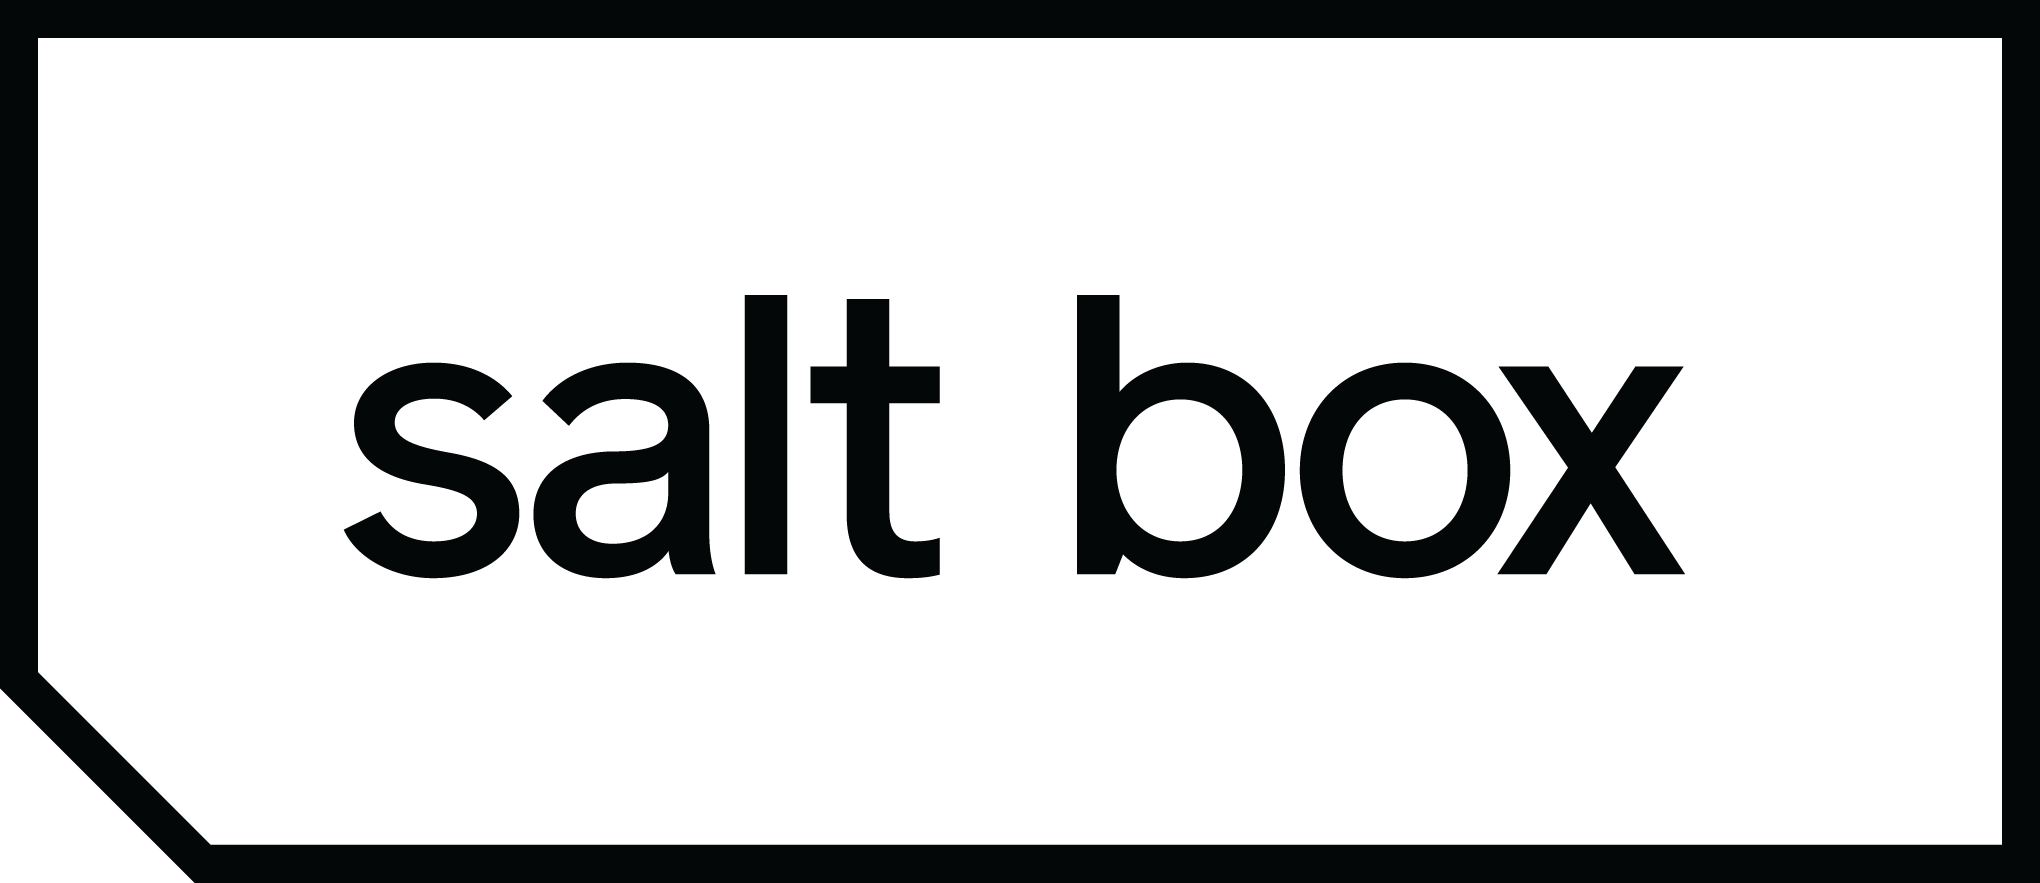 Salt Box